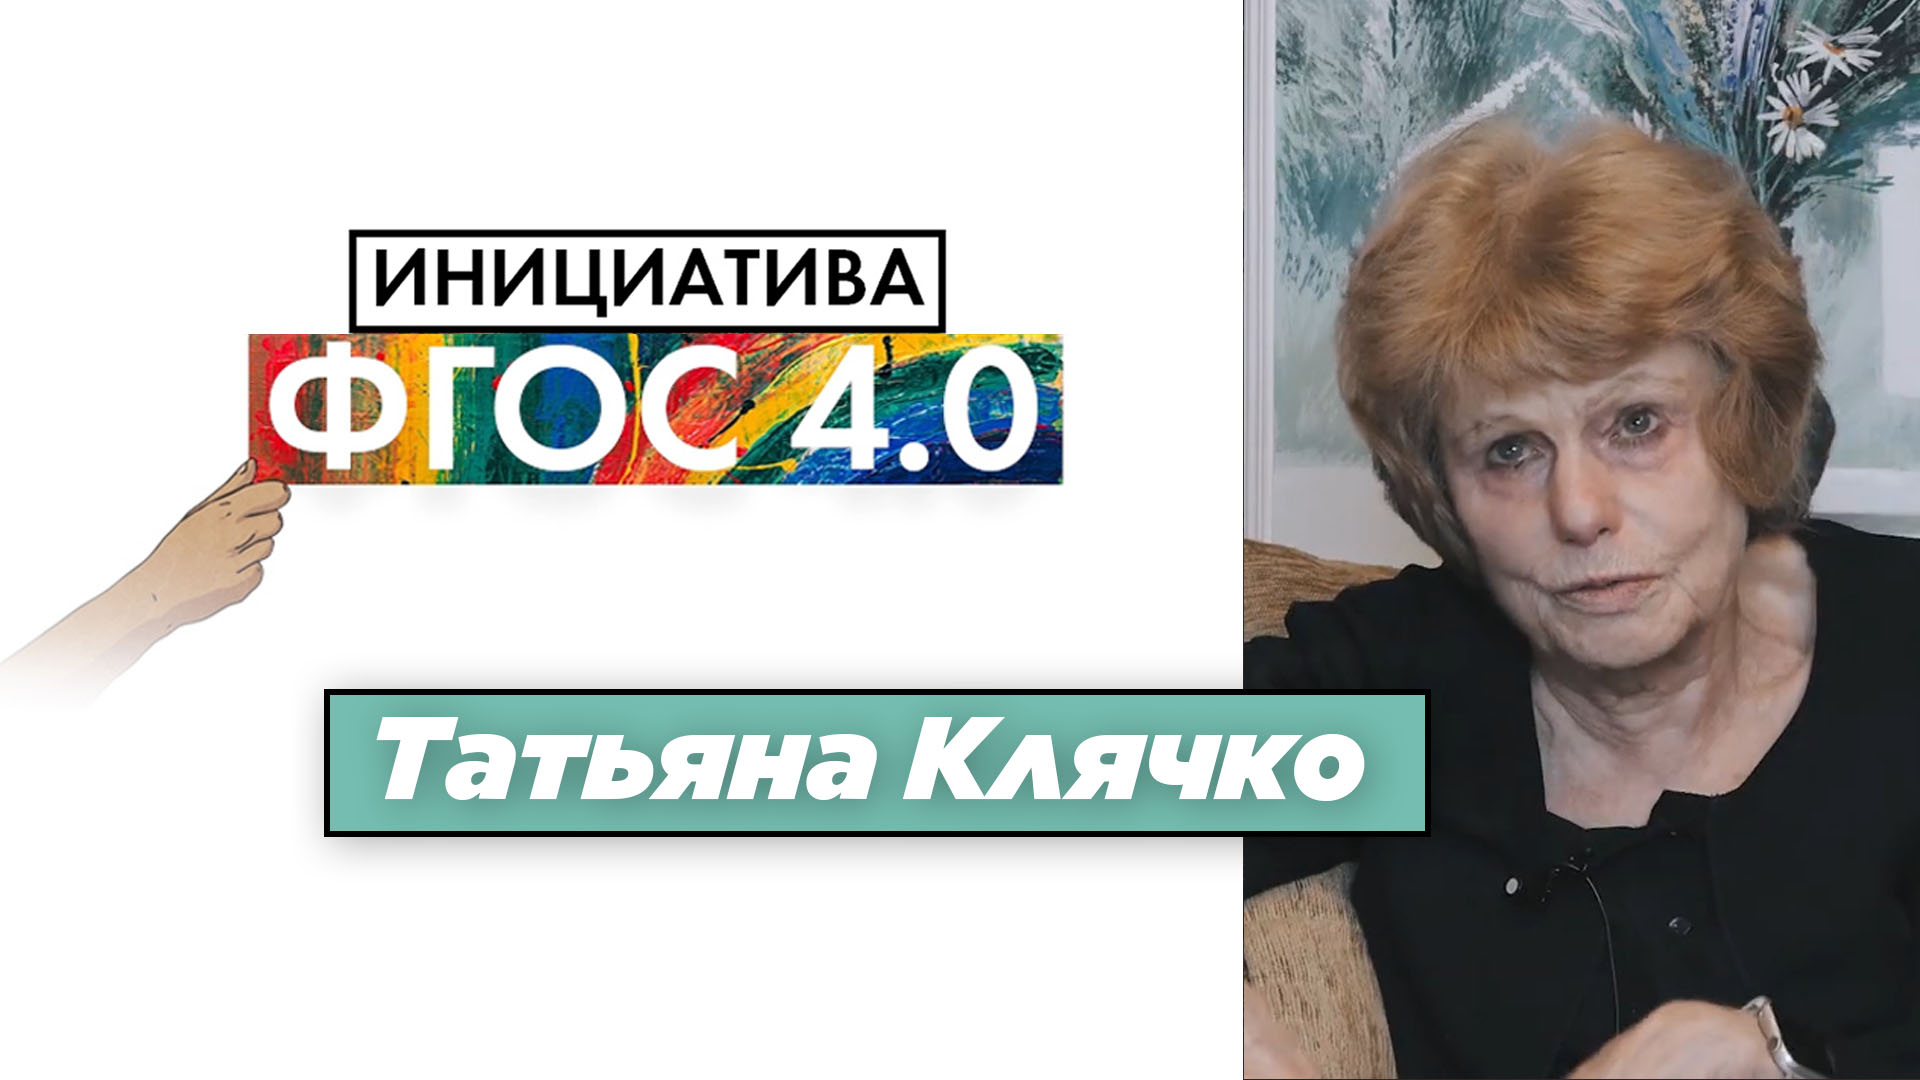 Татьяна Клячко: Инициатива ФГОС 4.0. Экономика